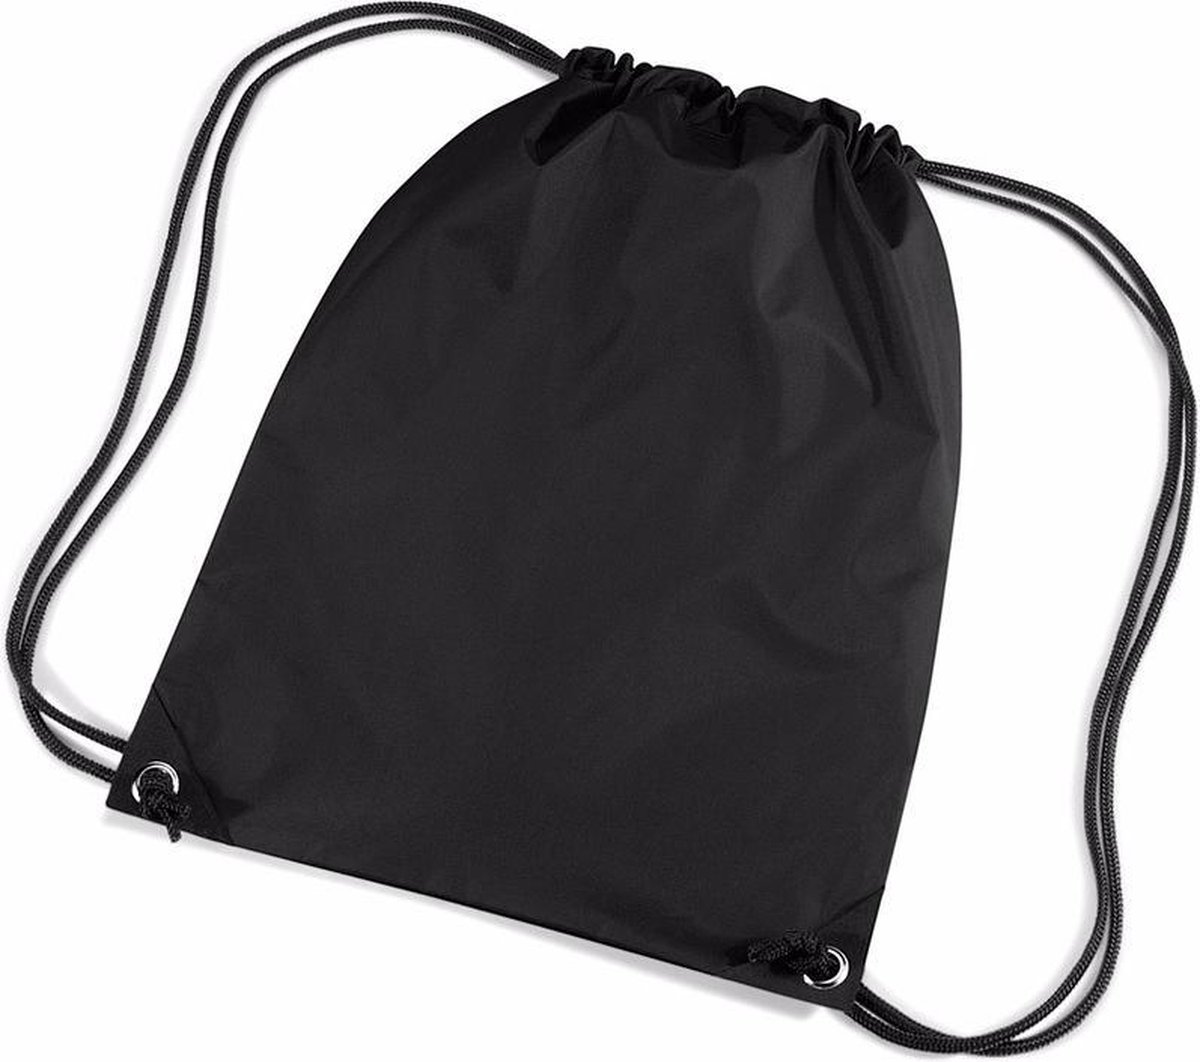 12x zwarte stuks nylon gymtassen/ gymtasjes met rijgkoord